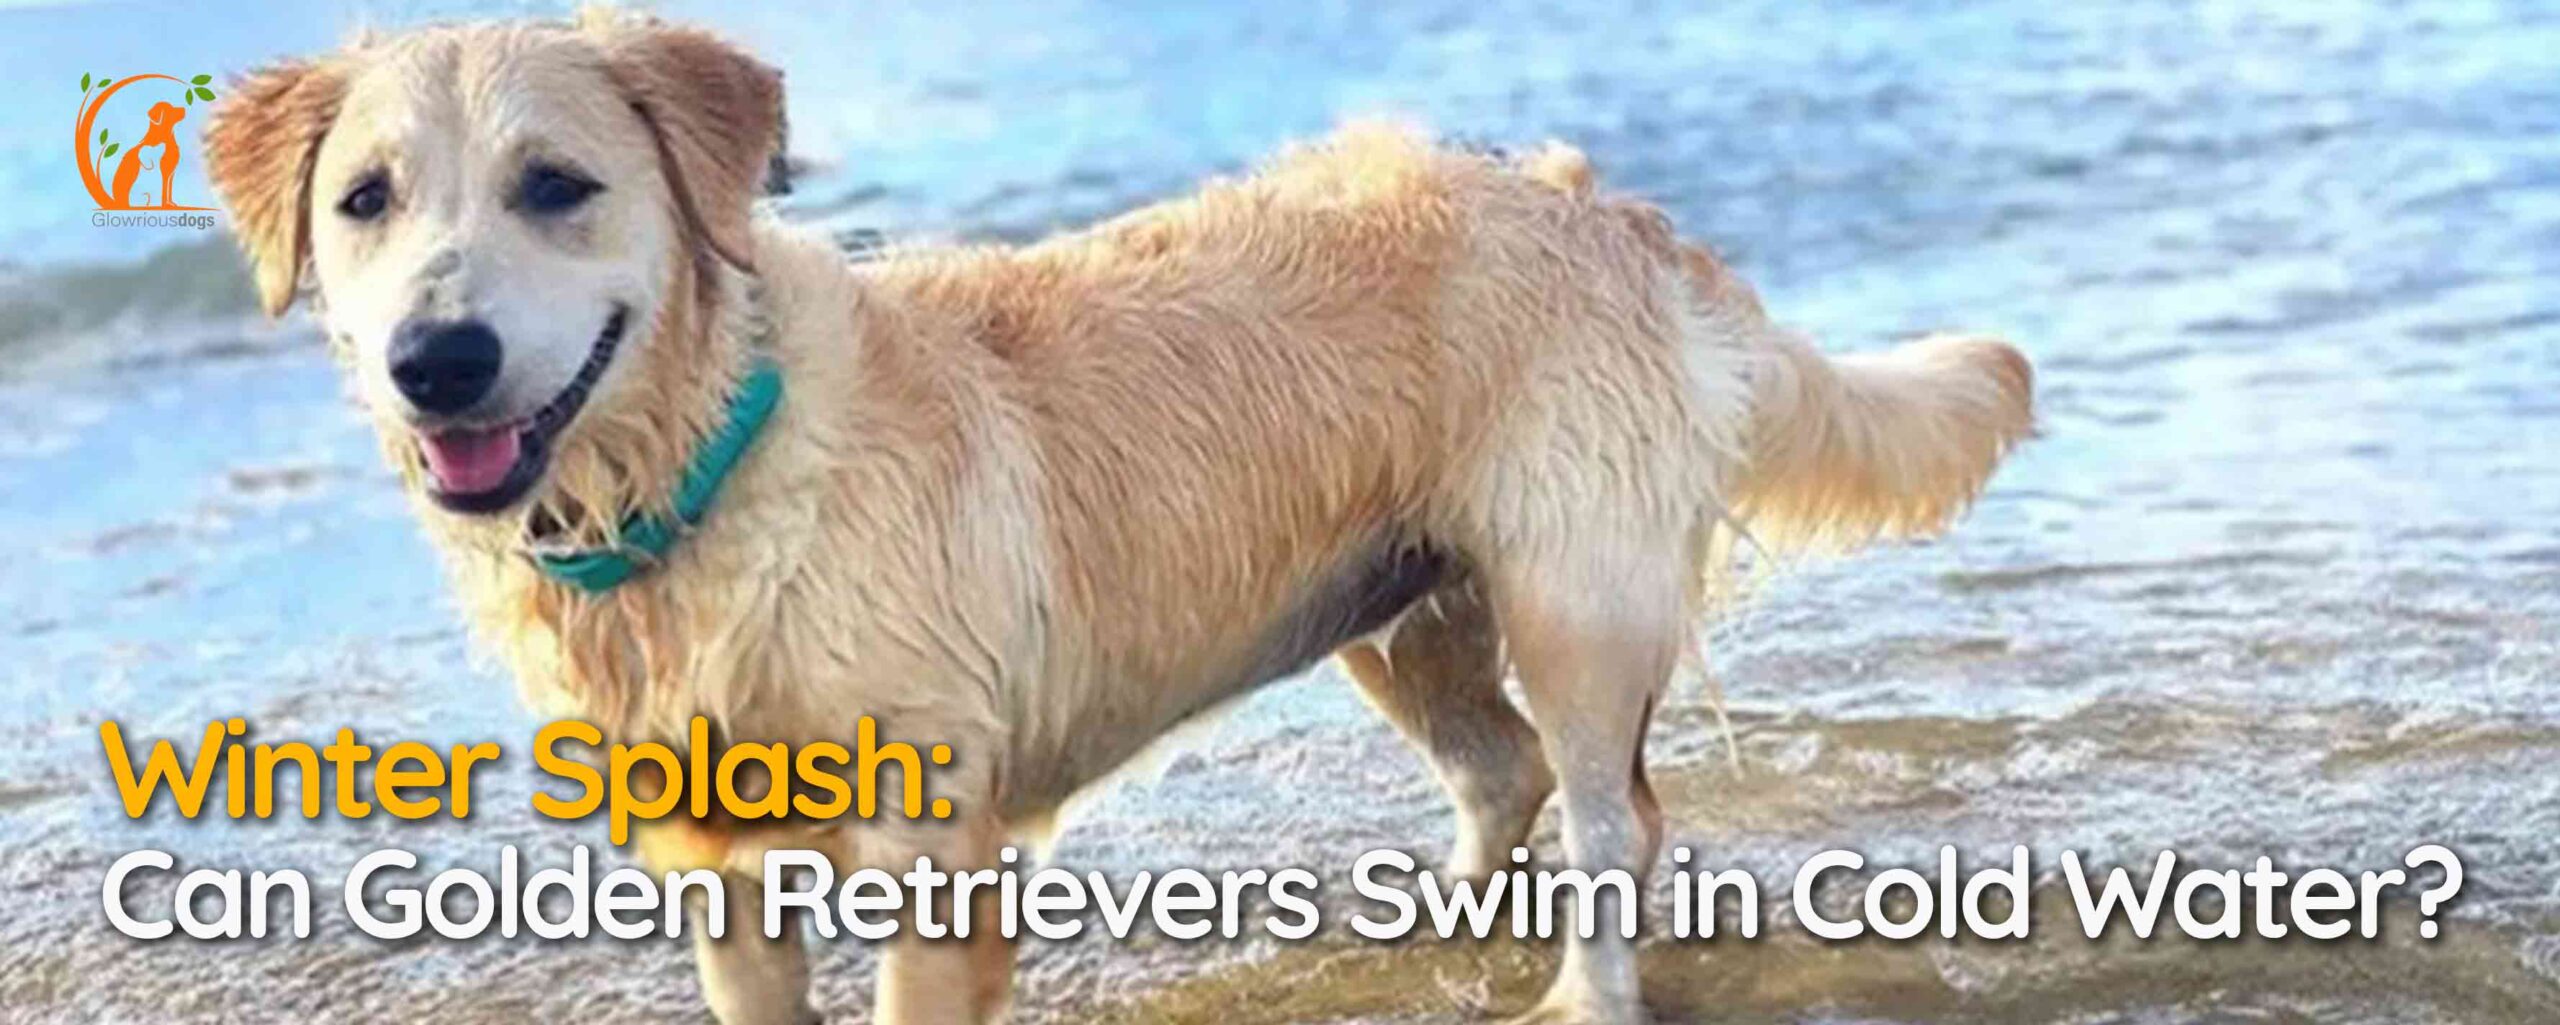 Winter Splash: Can Golden Retrievers Swim in Cold Water?